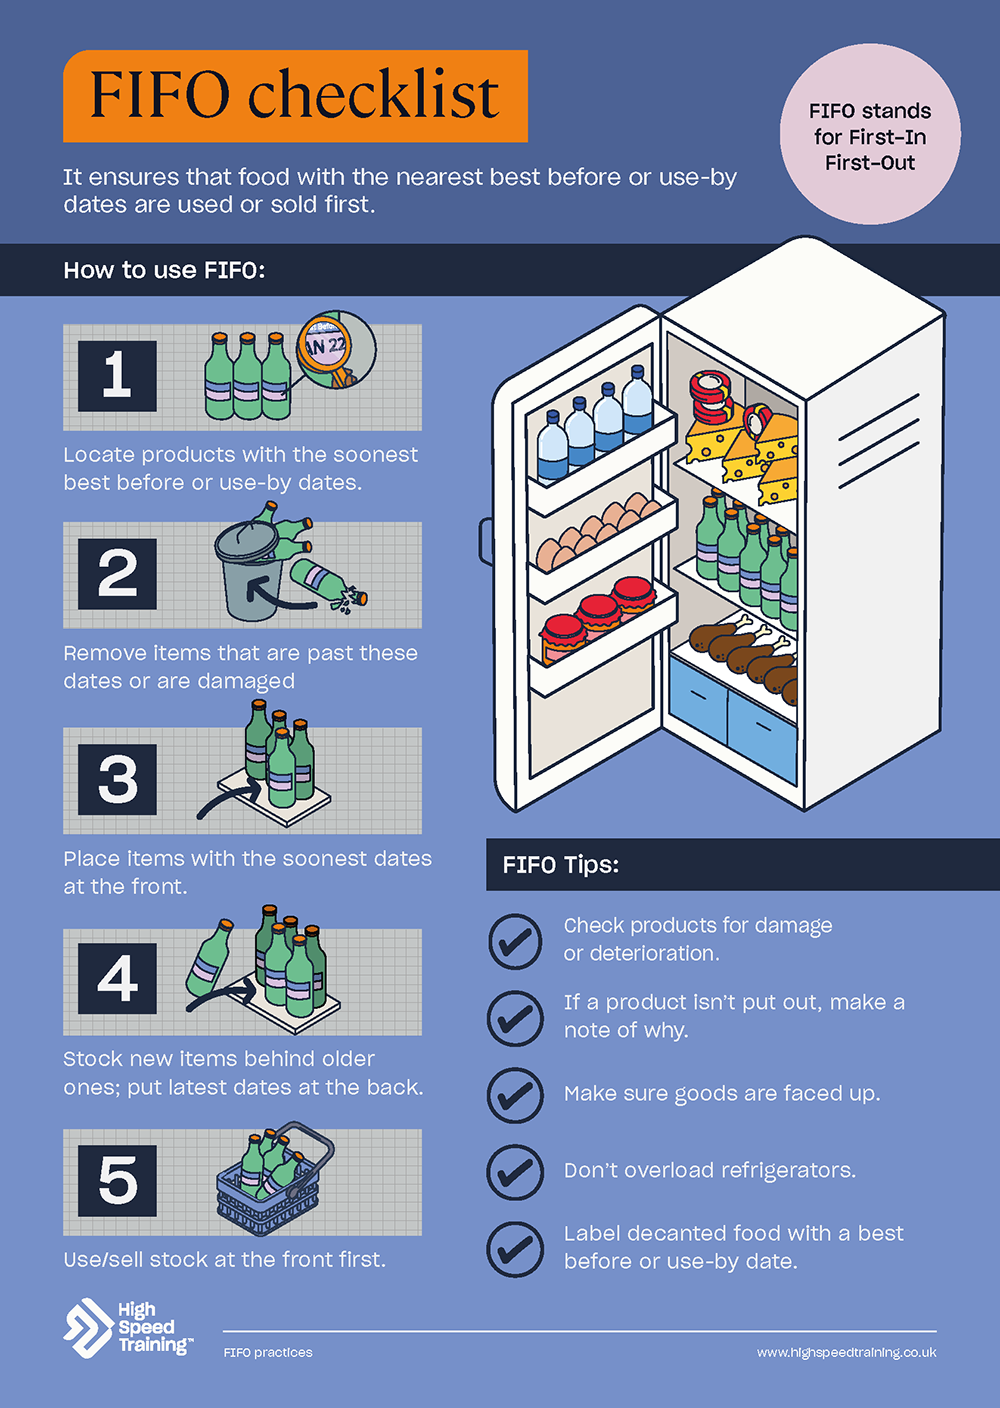 Using a FIFO Food Storage System Advice & Checklist